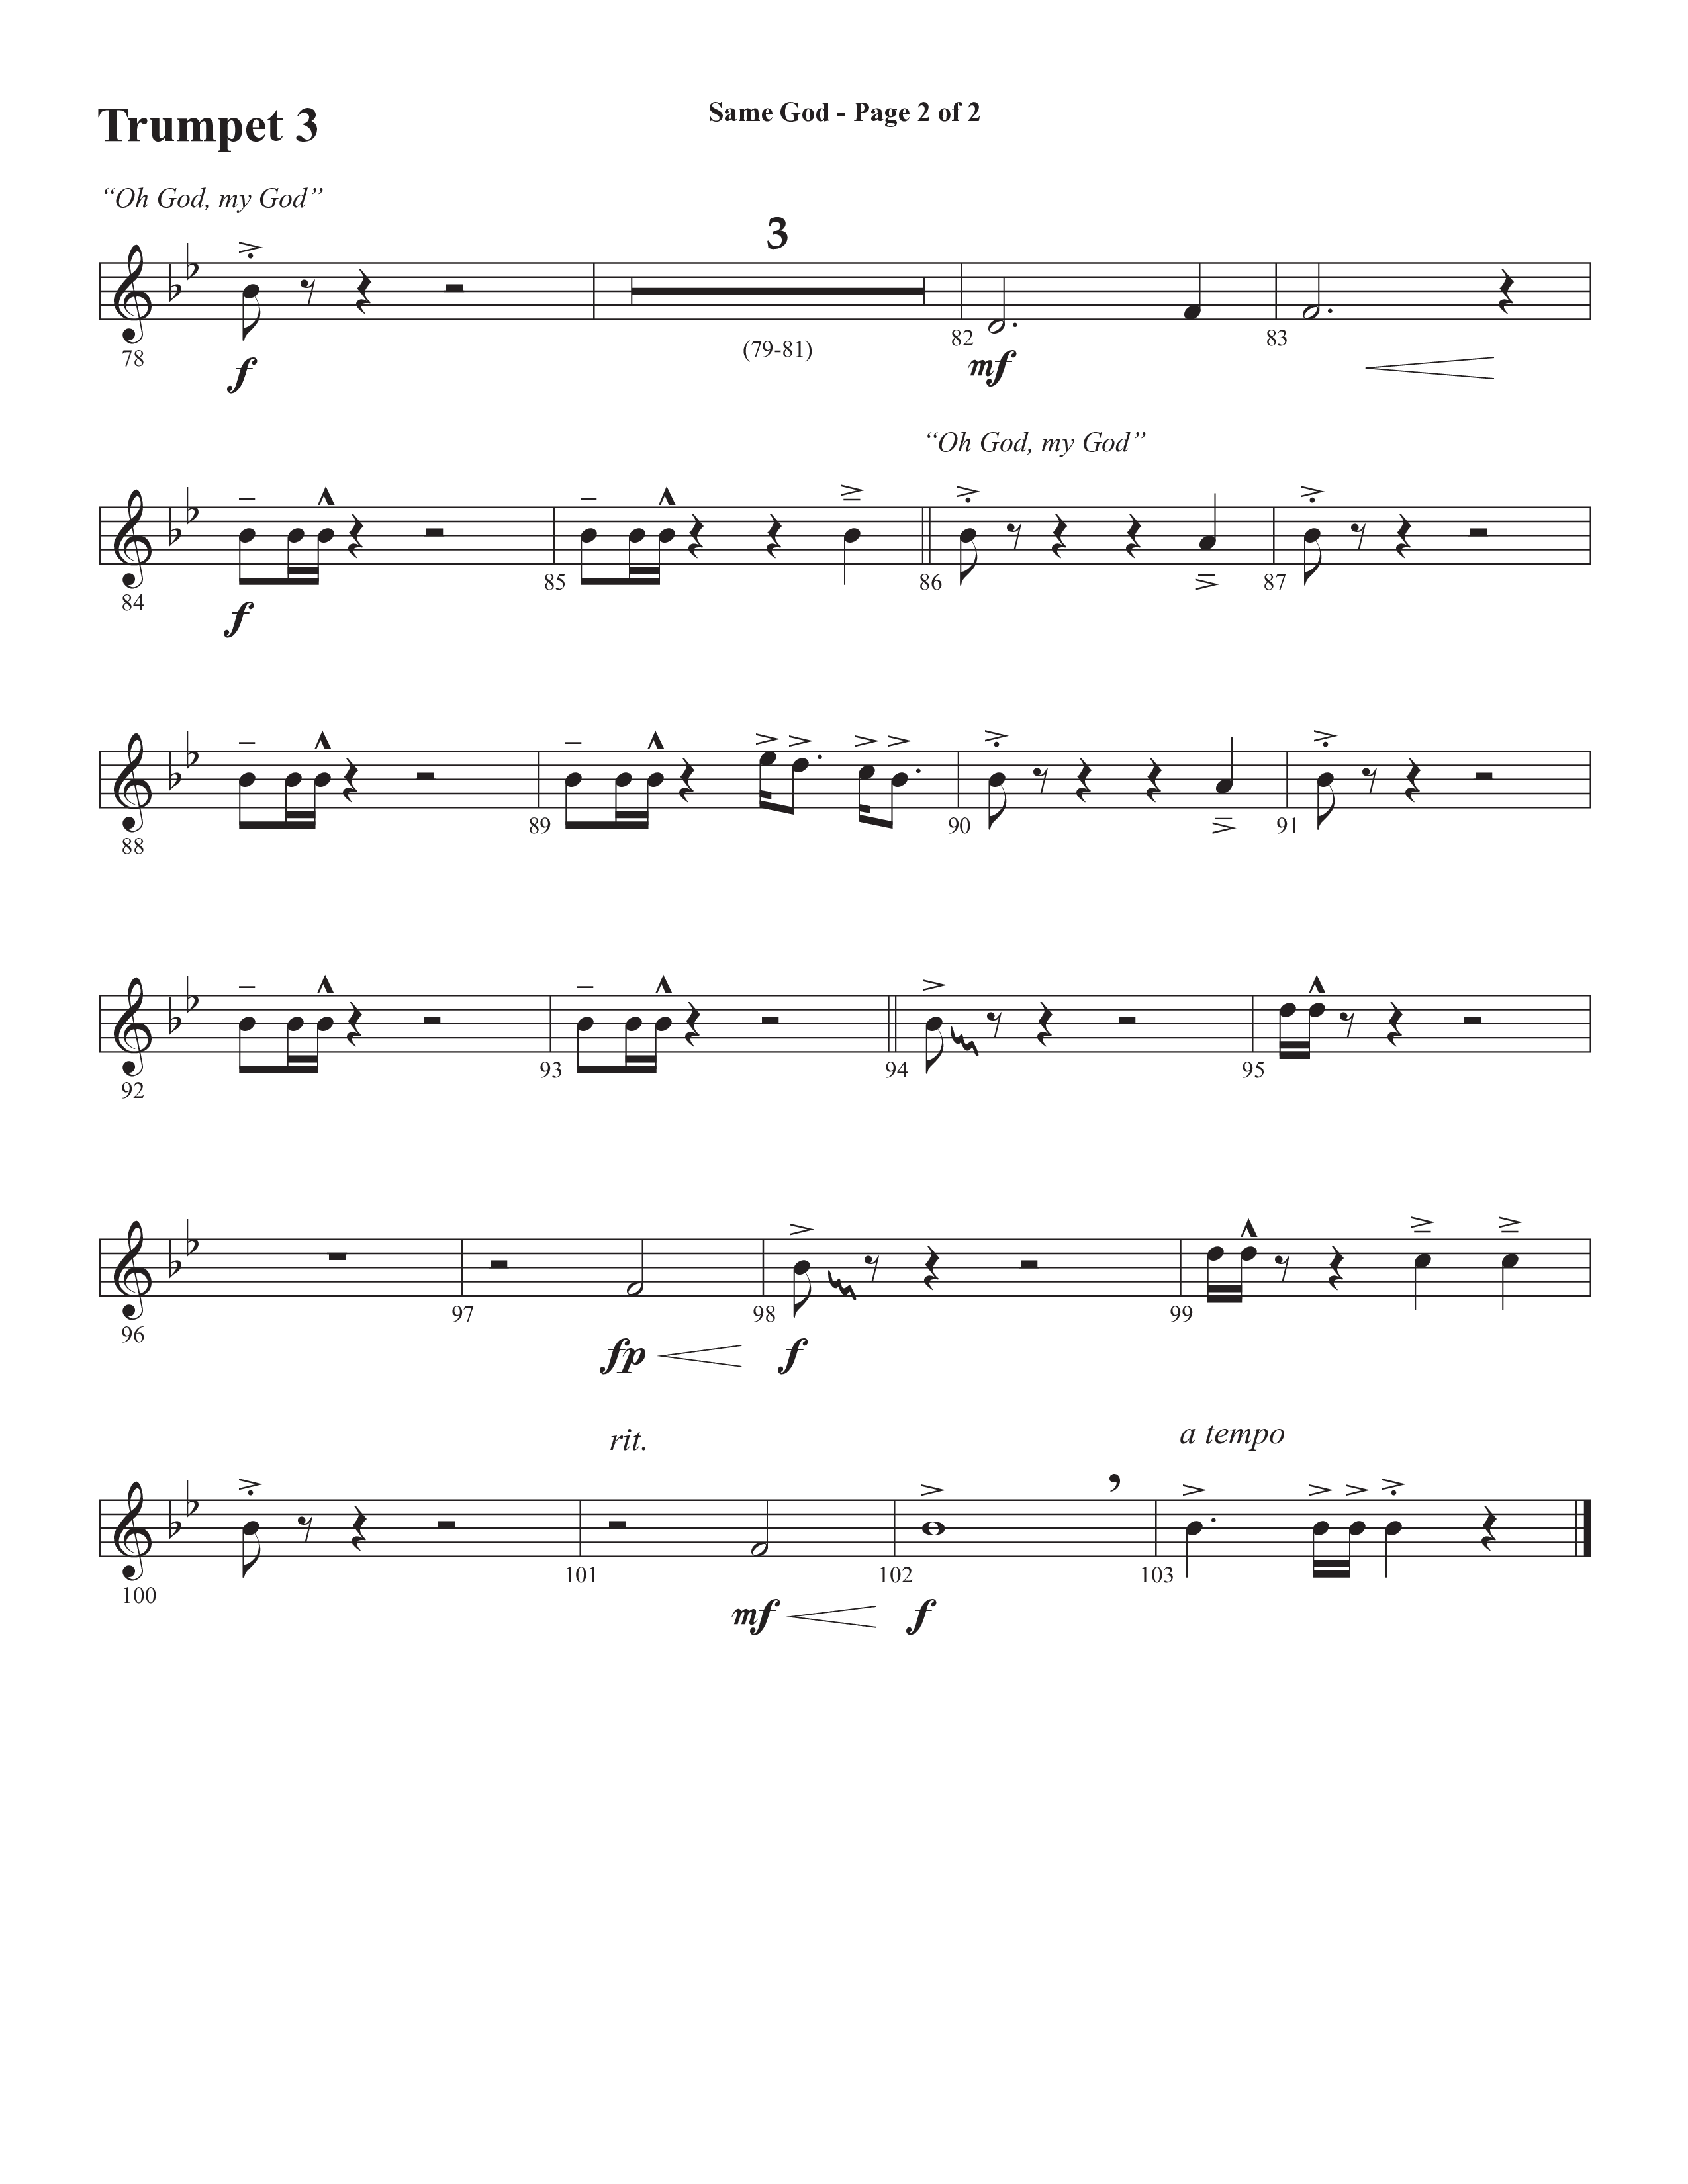 Same God (Choral Anthem SATB) Trumpet 3 (Semsen Music / Arr. Phil Nitz)